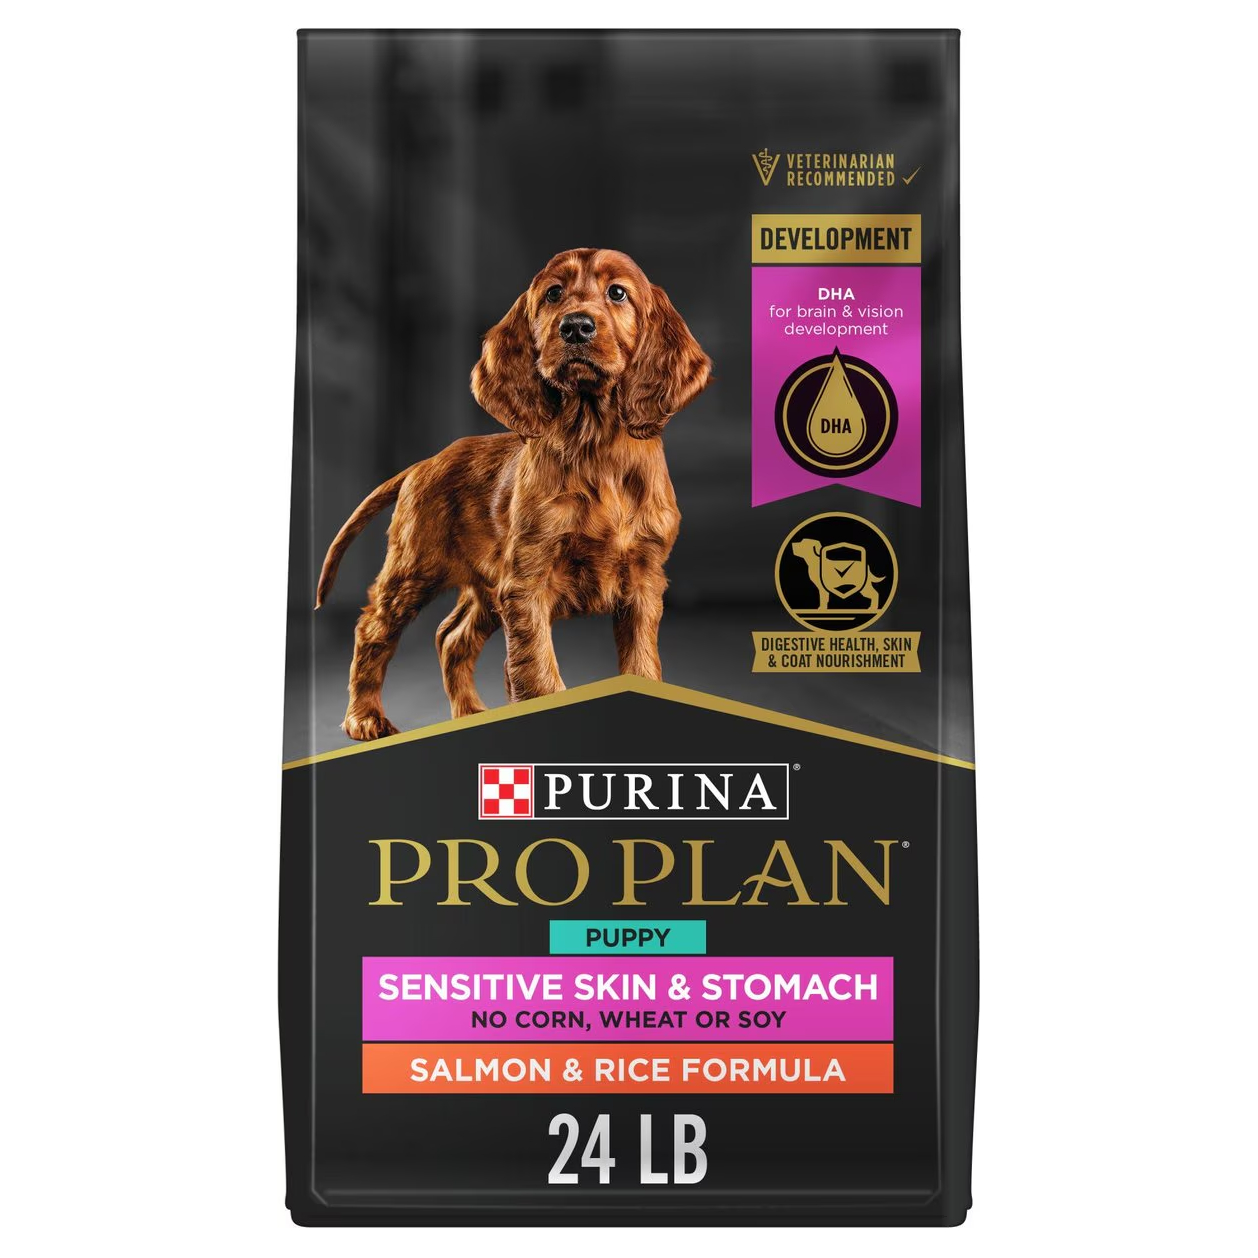 Purina Pro Plan Puppy Sensitive Skin & Stomach Dry Food